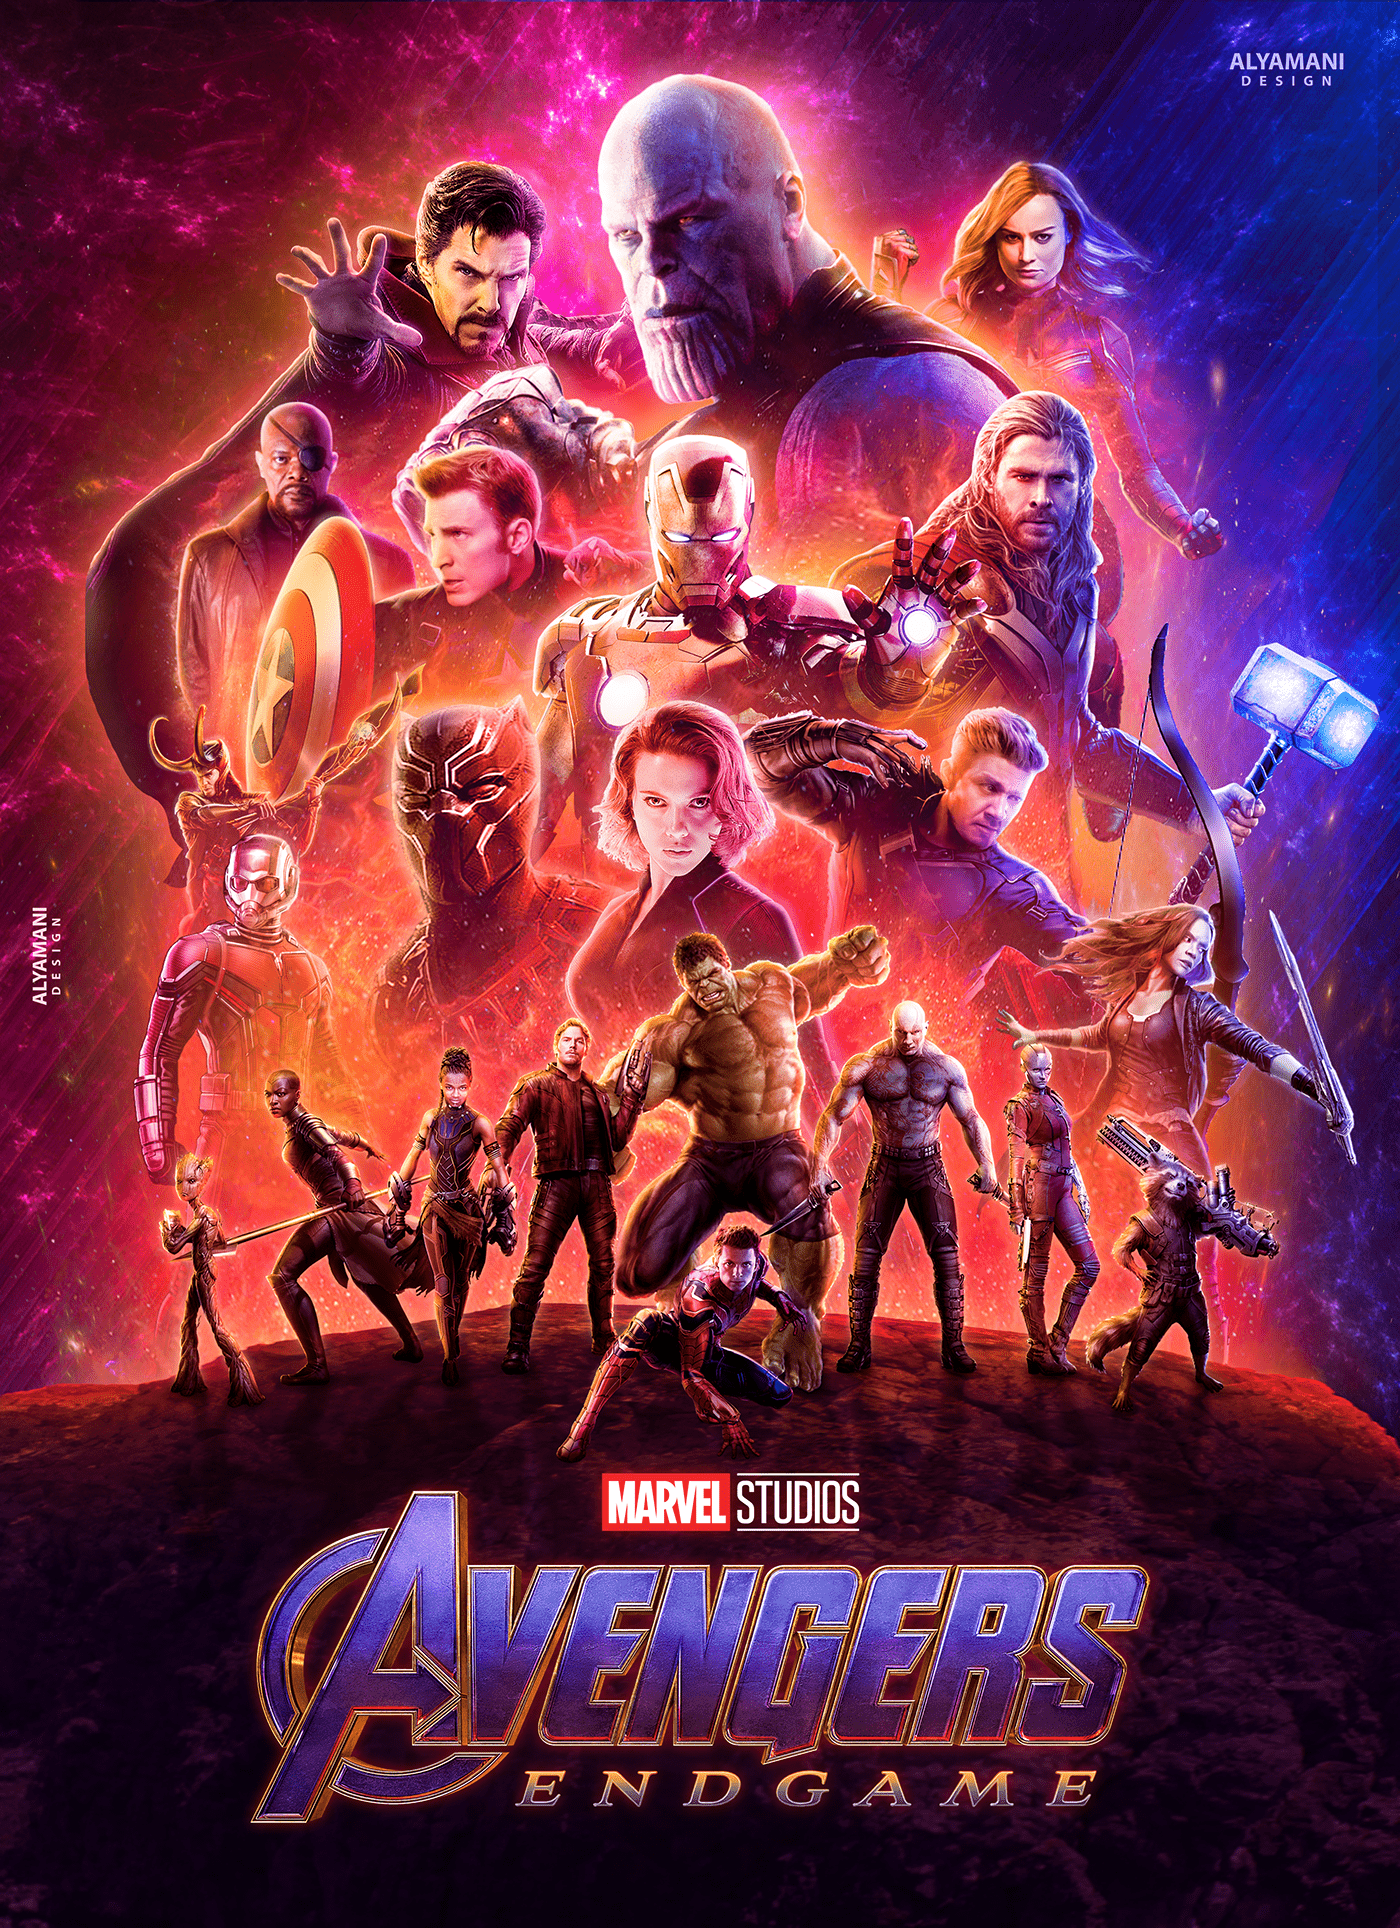 Avengers Avengers Endgame creative manipulation manipulations photoshop poster Poster Design professional Unique